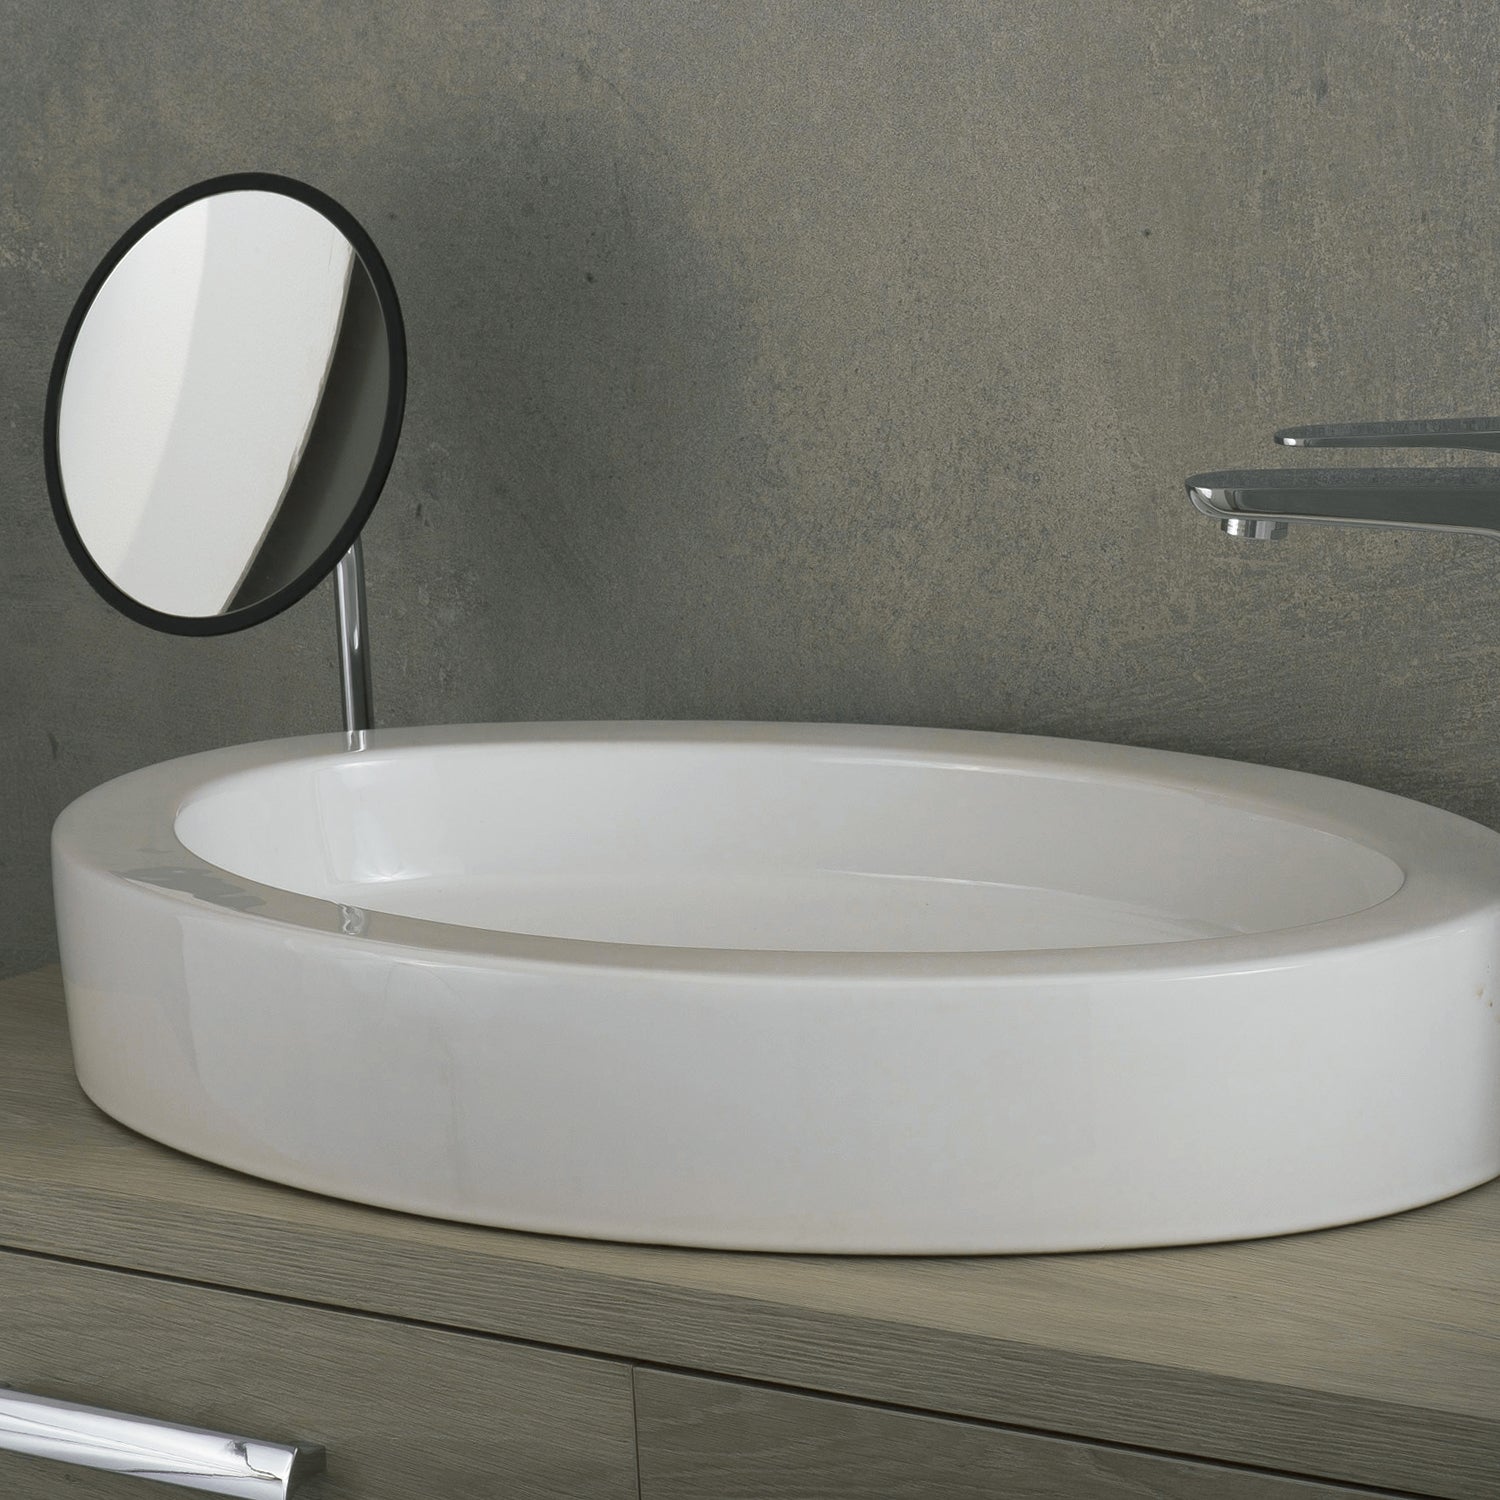 DAX Ceramic Oval Single Bowl Bathroom Vessel Sink, White Finish, 25 x 16-1/3 x 3-1/2 Inches (BSN-CL1219)